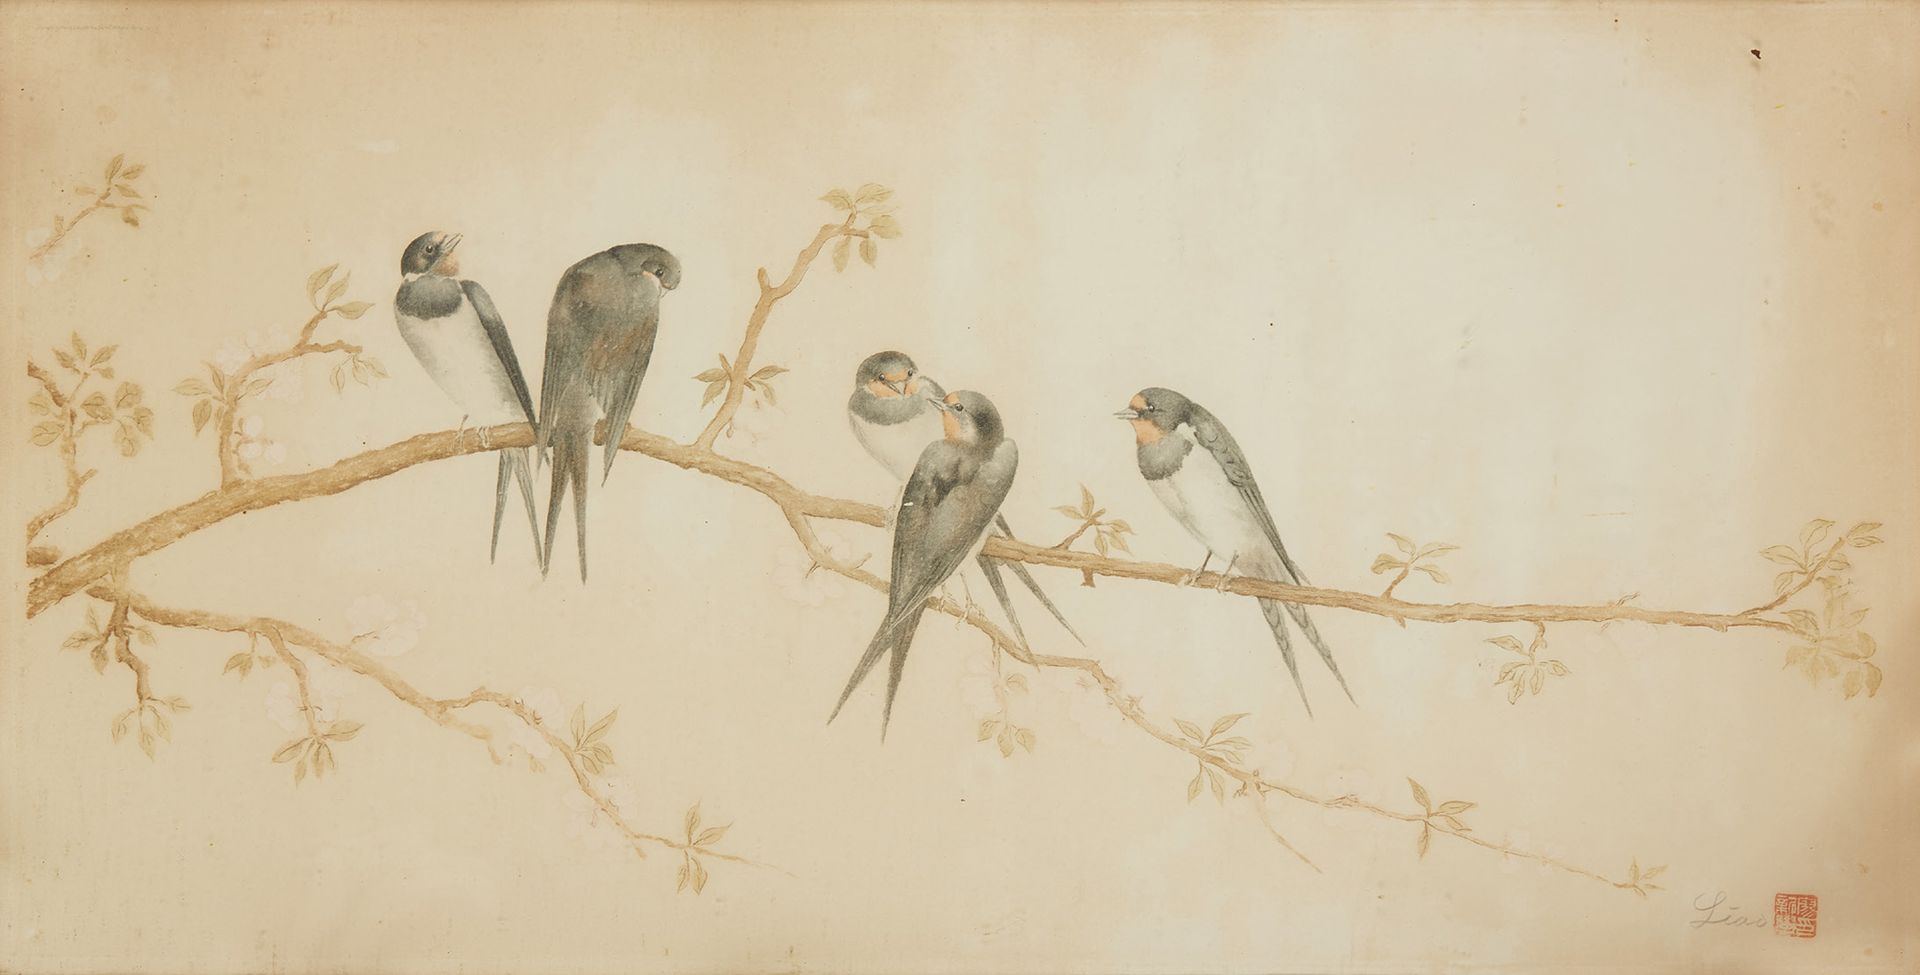 LIAO XINXUE (1906-1958) 纸上水墨和浅色的横幅画，描绘了五只燕子栖息在盛开的树枝上。
右下角有铅笔签名和红色印记的 "Liao"（有污损，&hellip;